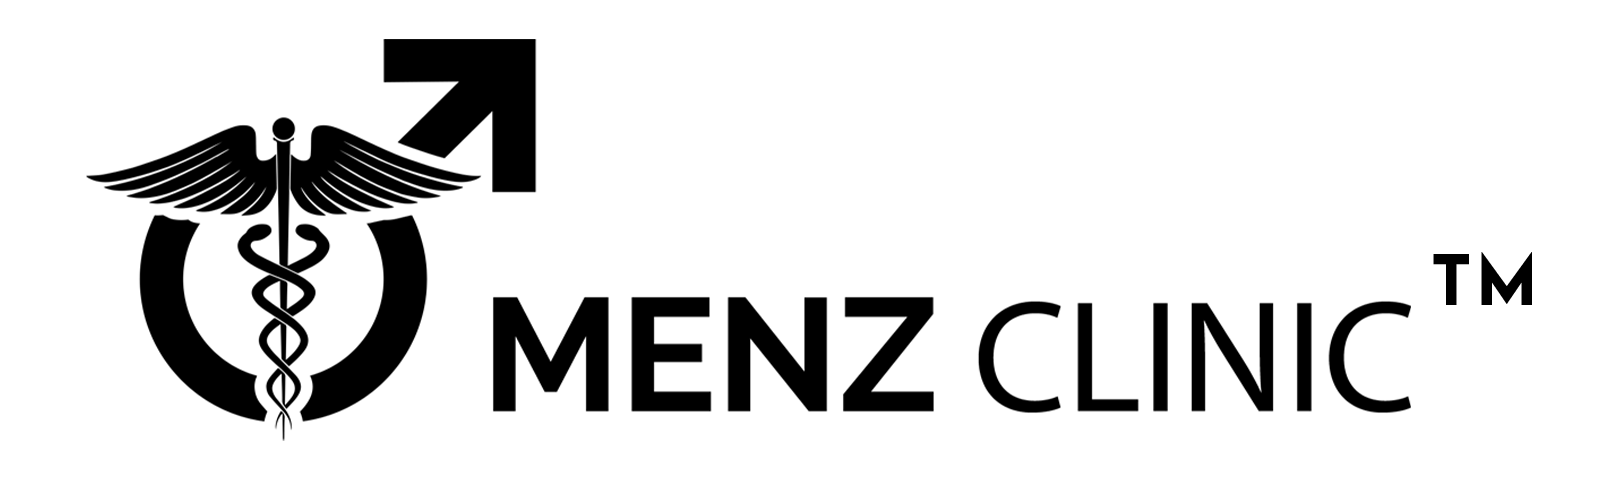 Logo-Black-7.png